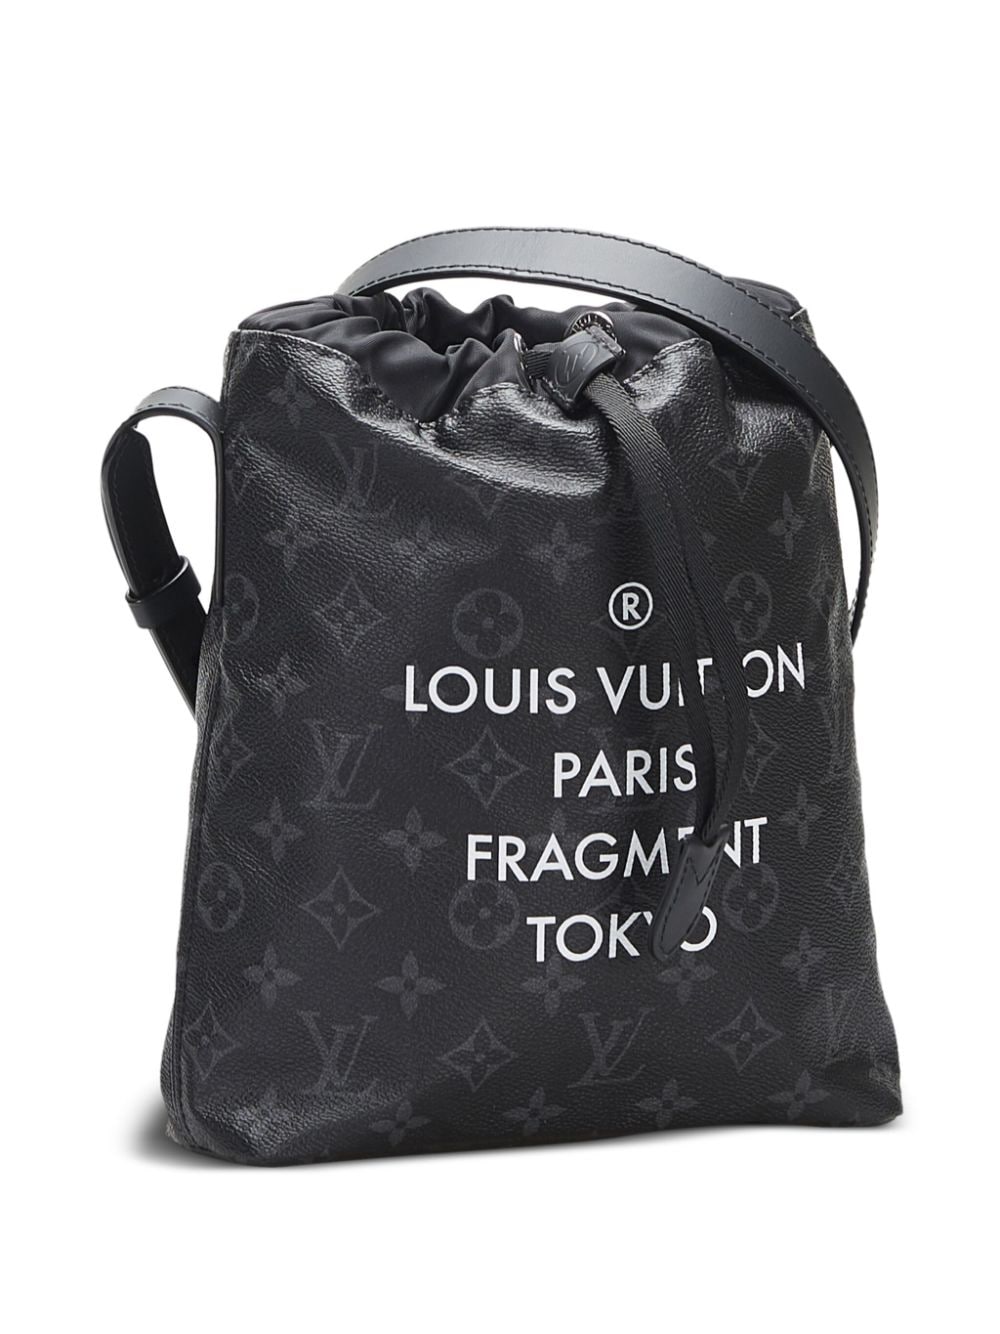 Luxury fashion takes to the street with Louis Vuitton x Fragment collection